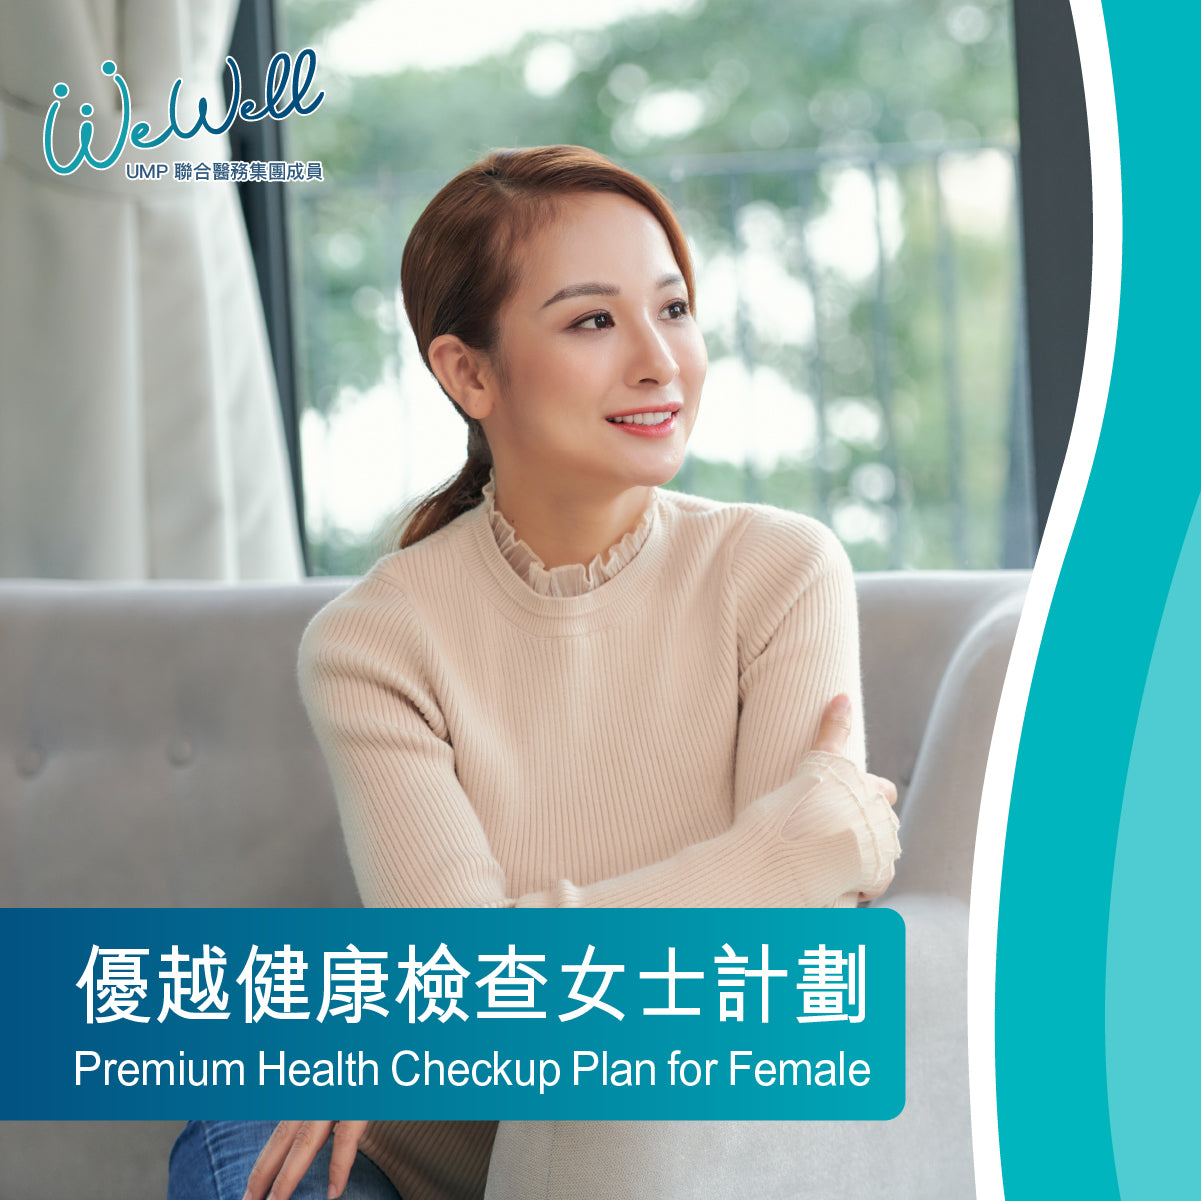 Premium Health Check-up Plan for Female